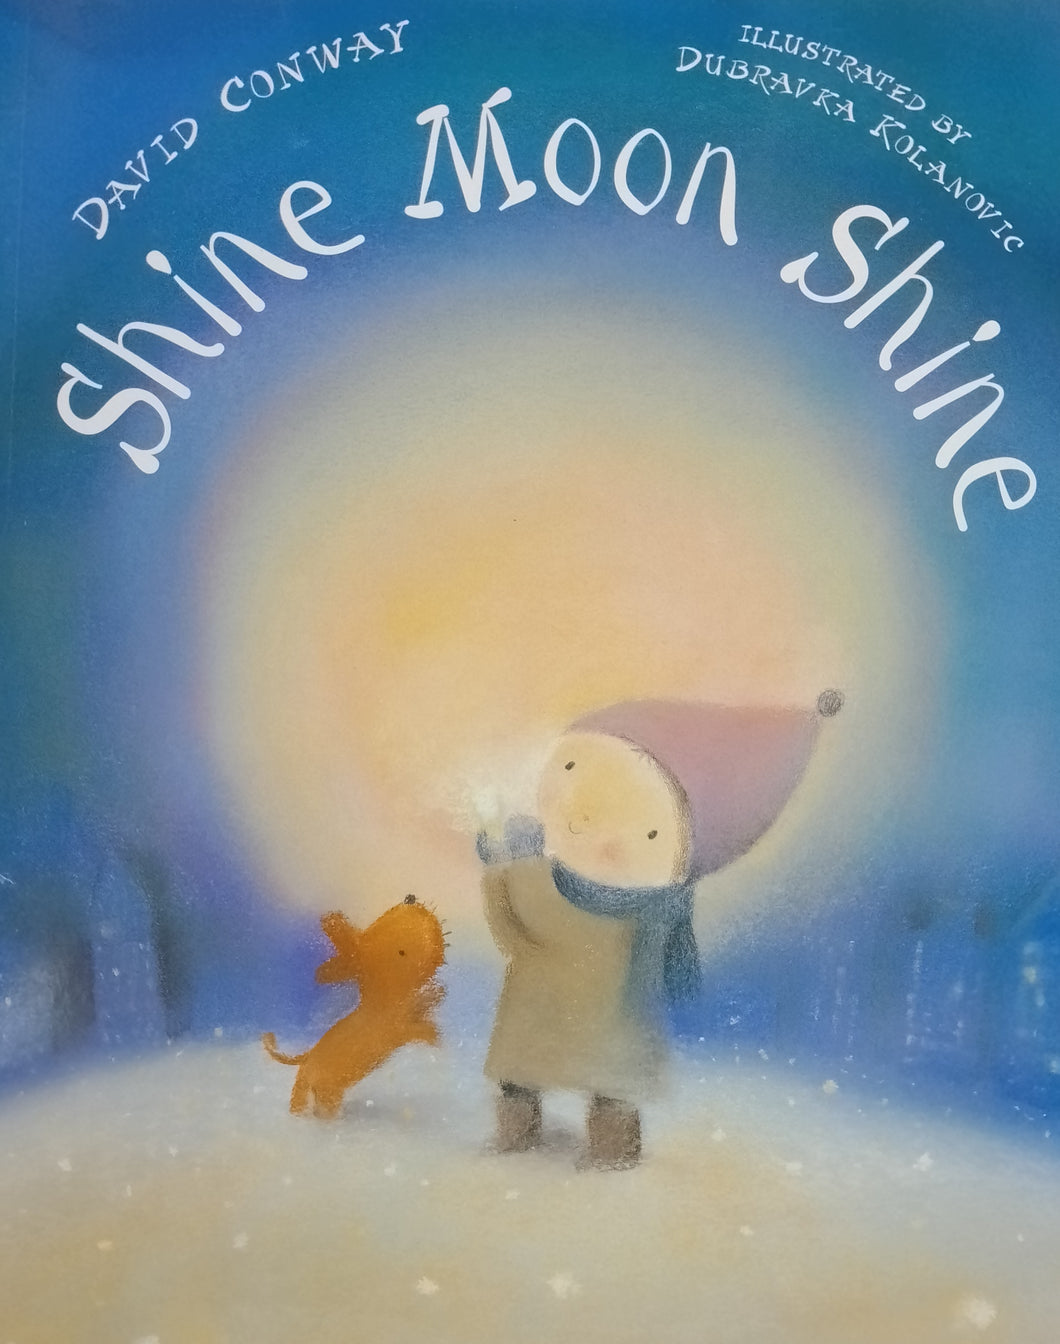 Shine Moon Shine by David Conway